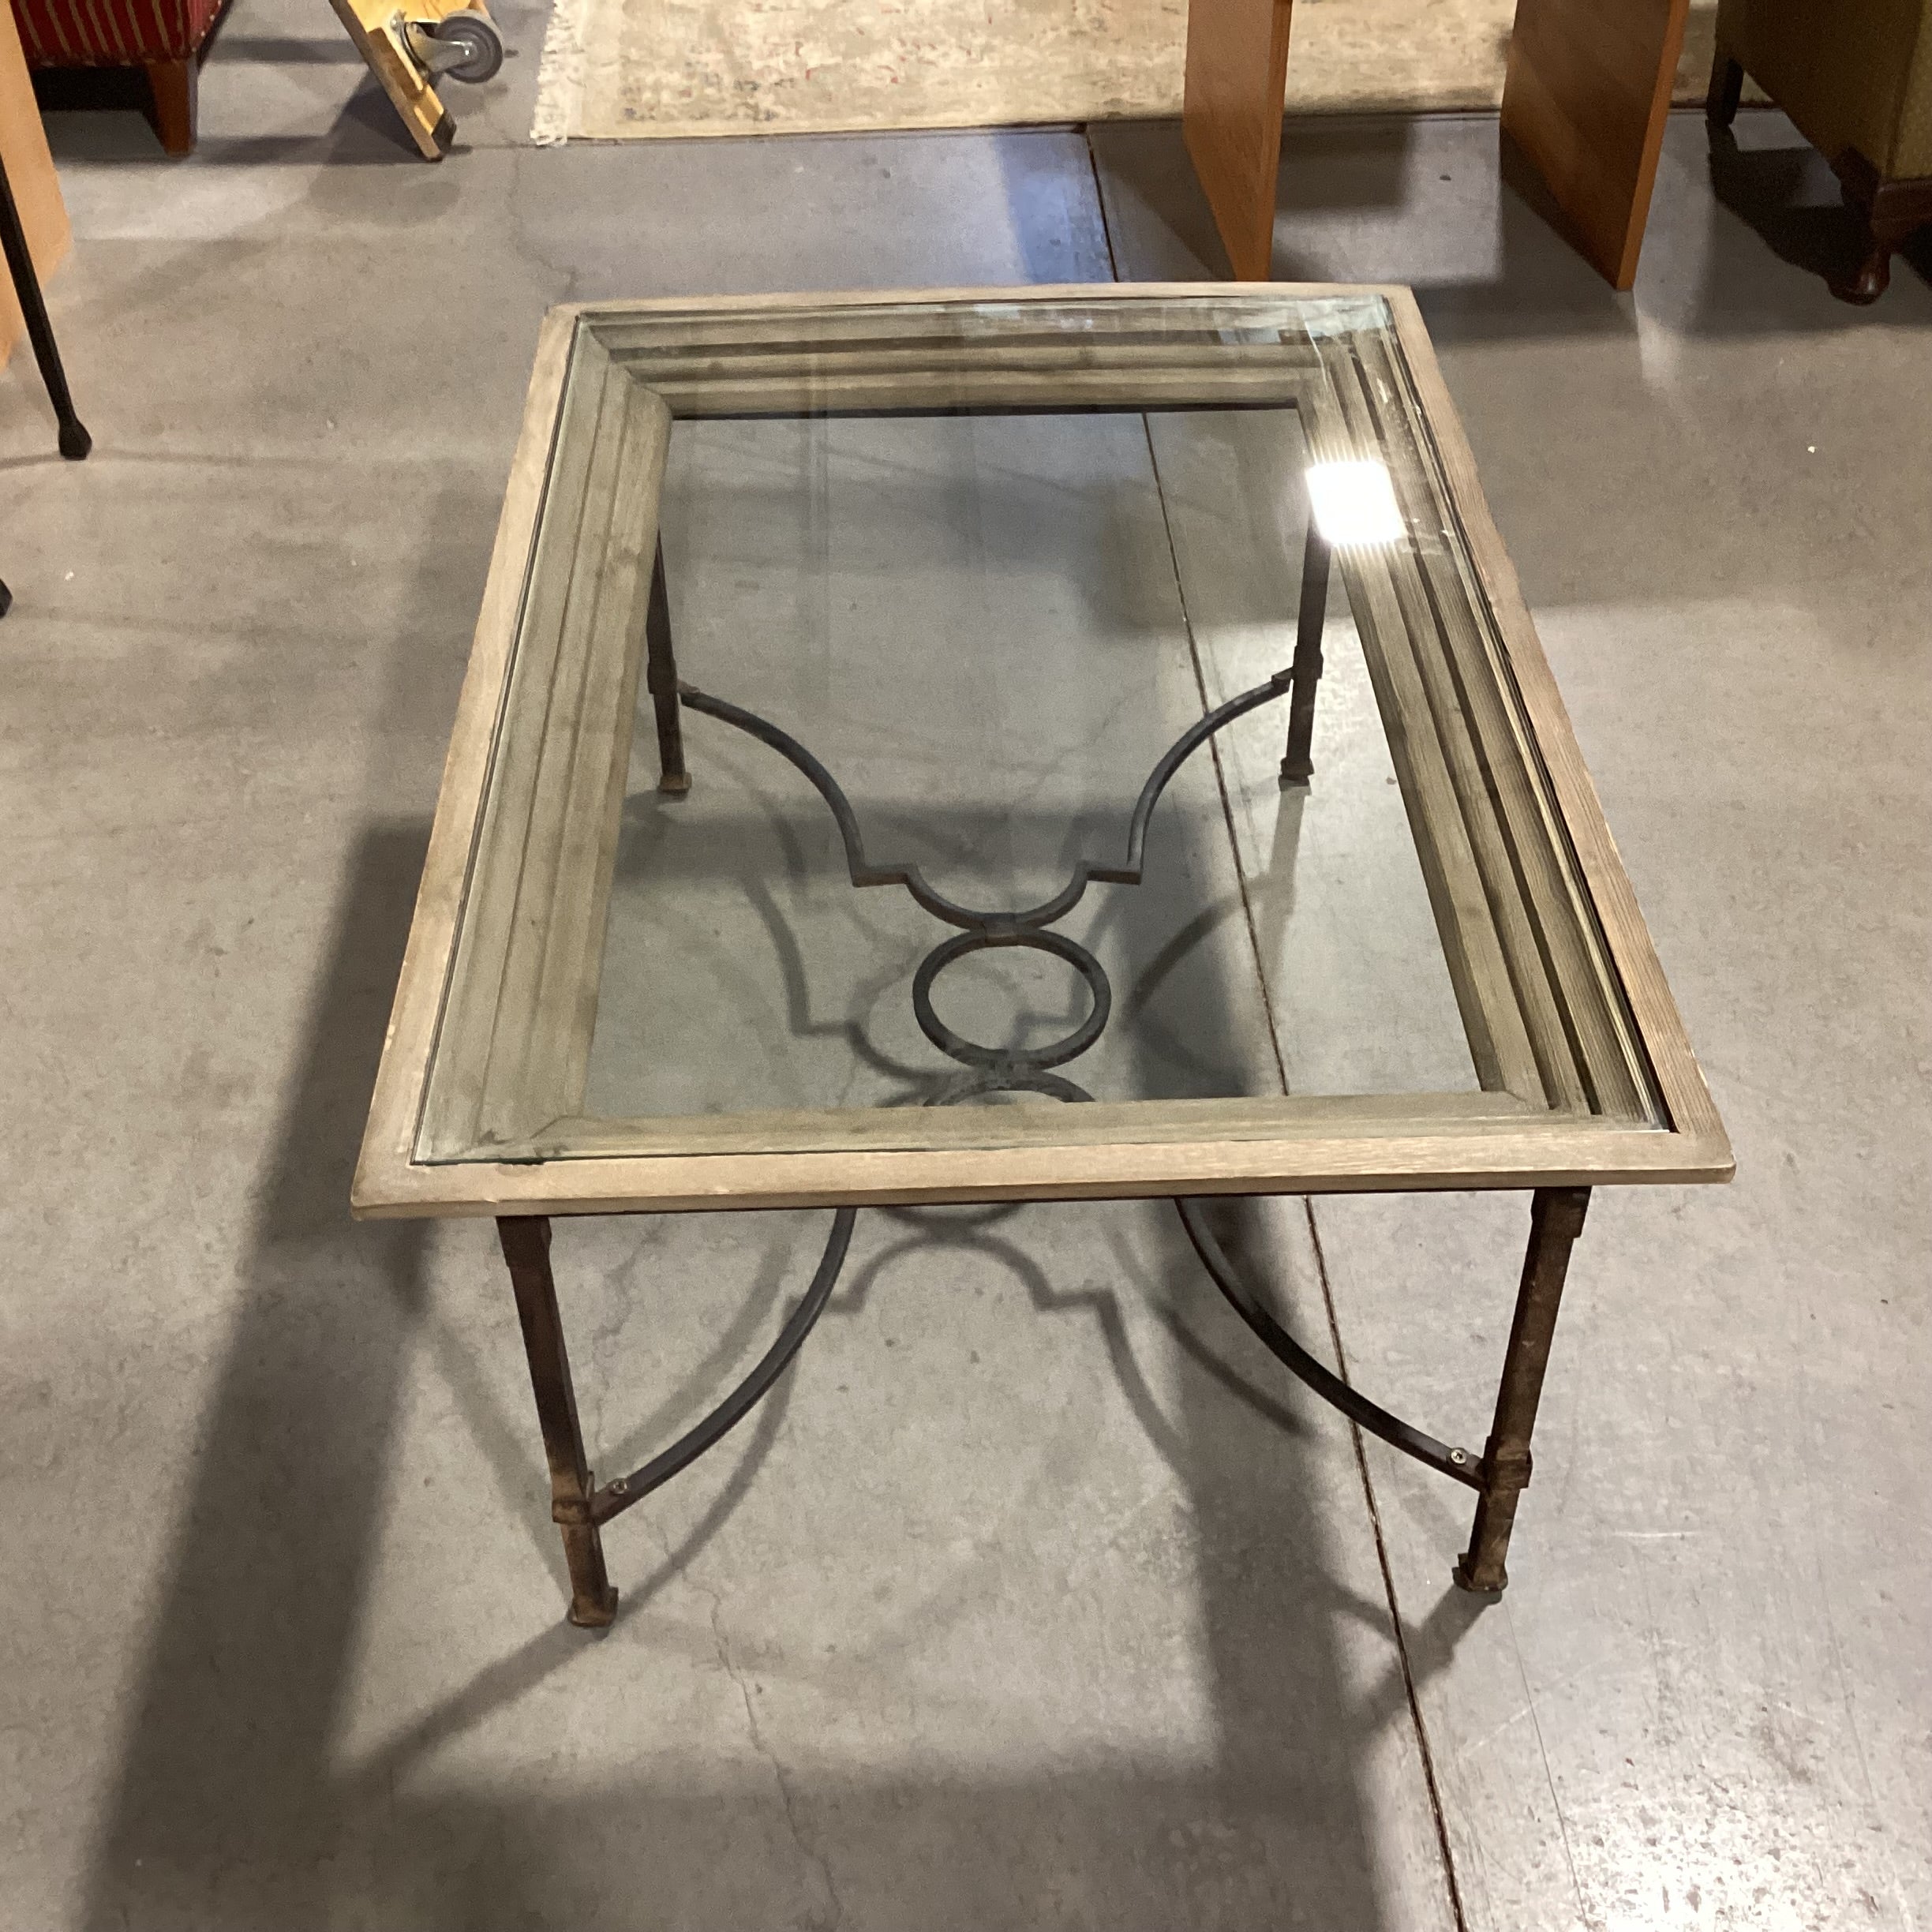 Rustic Wood Iron & Glass Coffee Table 42"x 30"x 19"